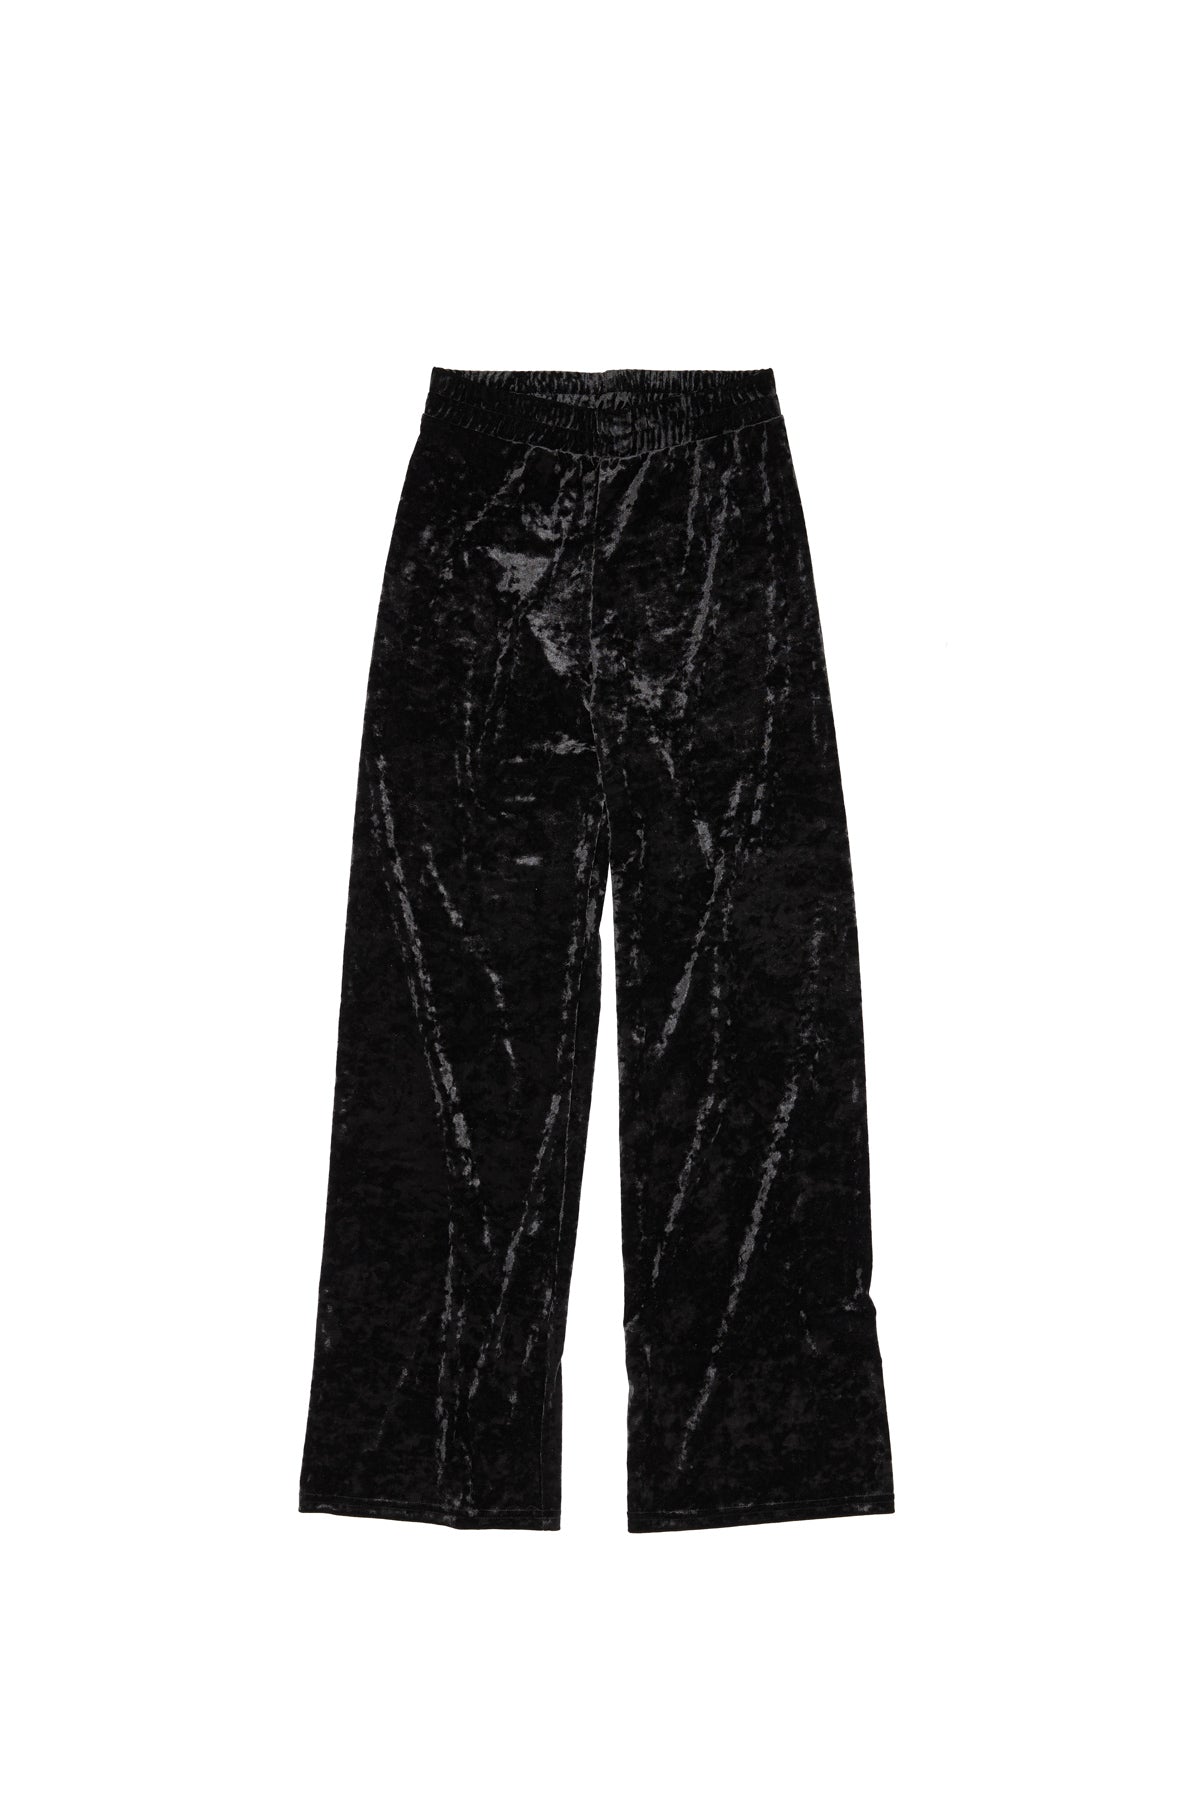 Simone Wild — Hammered Velvet Cosy Pants / Charcoal